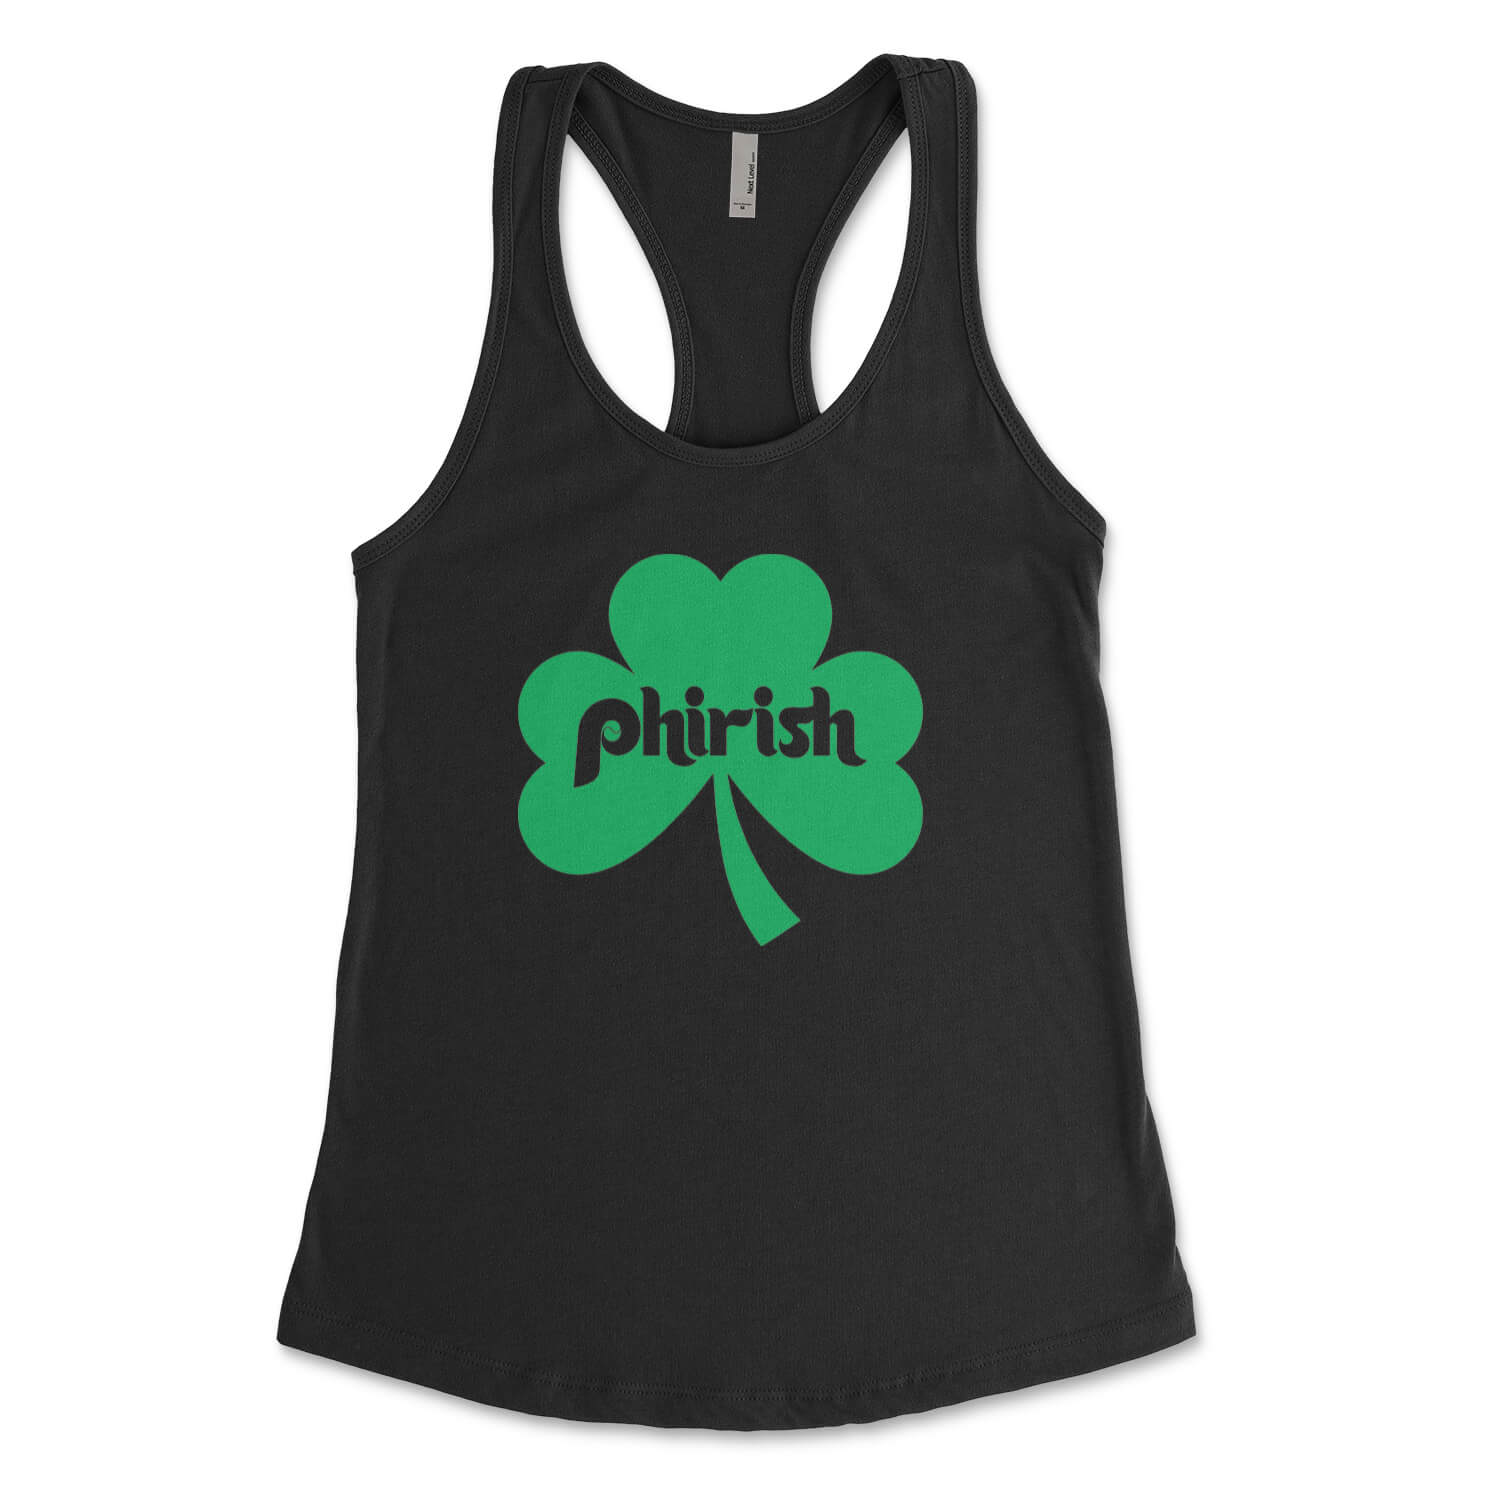 Philadelphia Irish Phirish shamrock st. paddy's day black womens tank top from Phillygoat